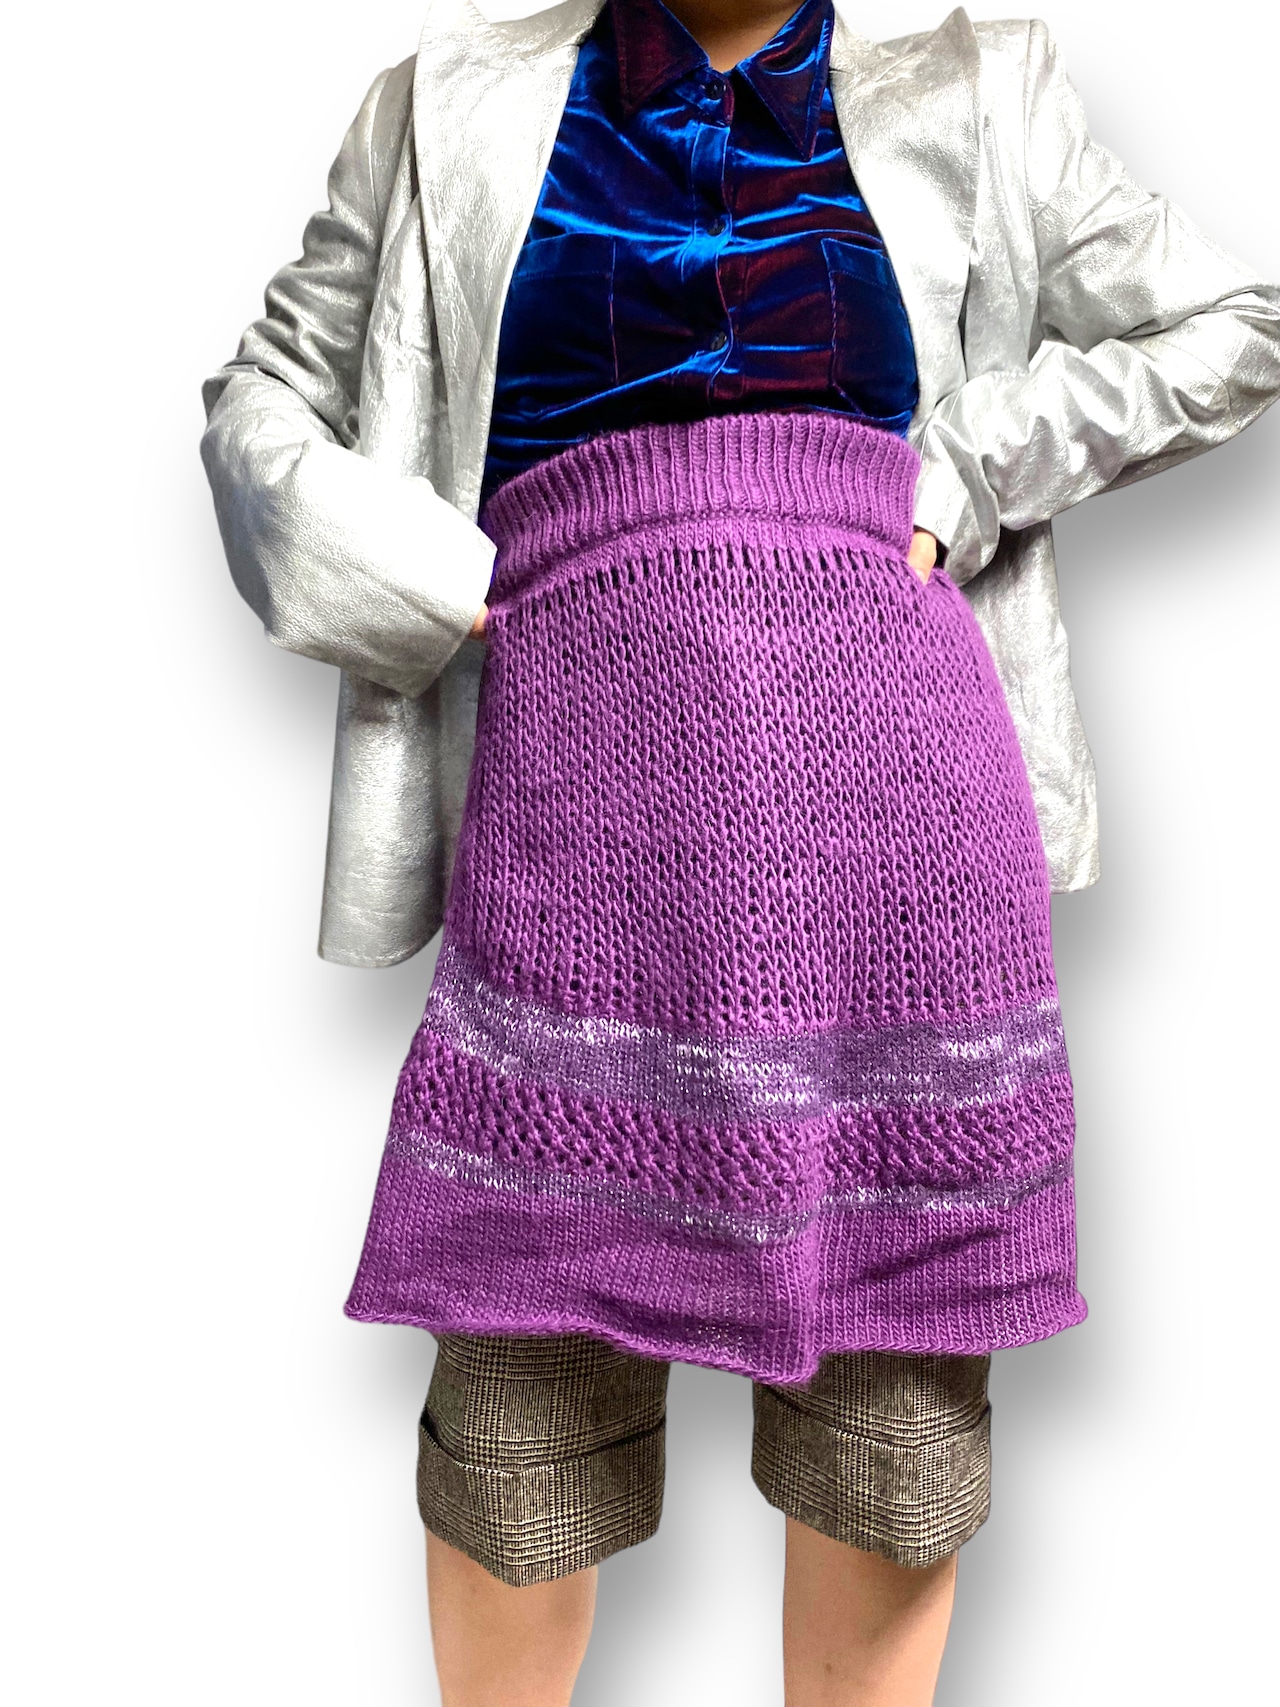 Knit mini skirt